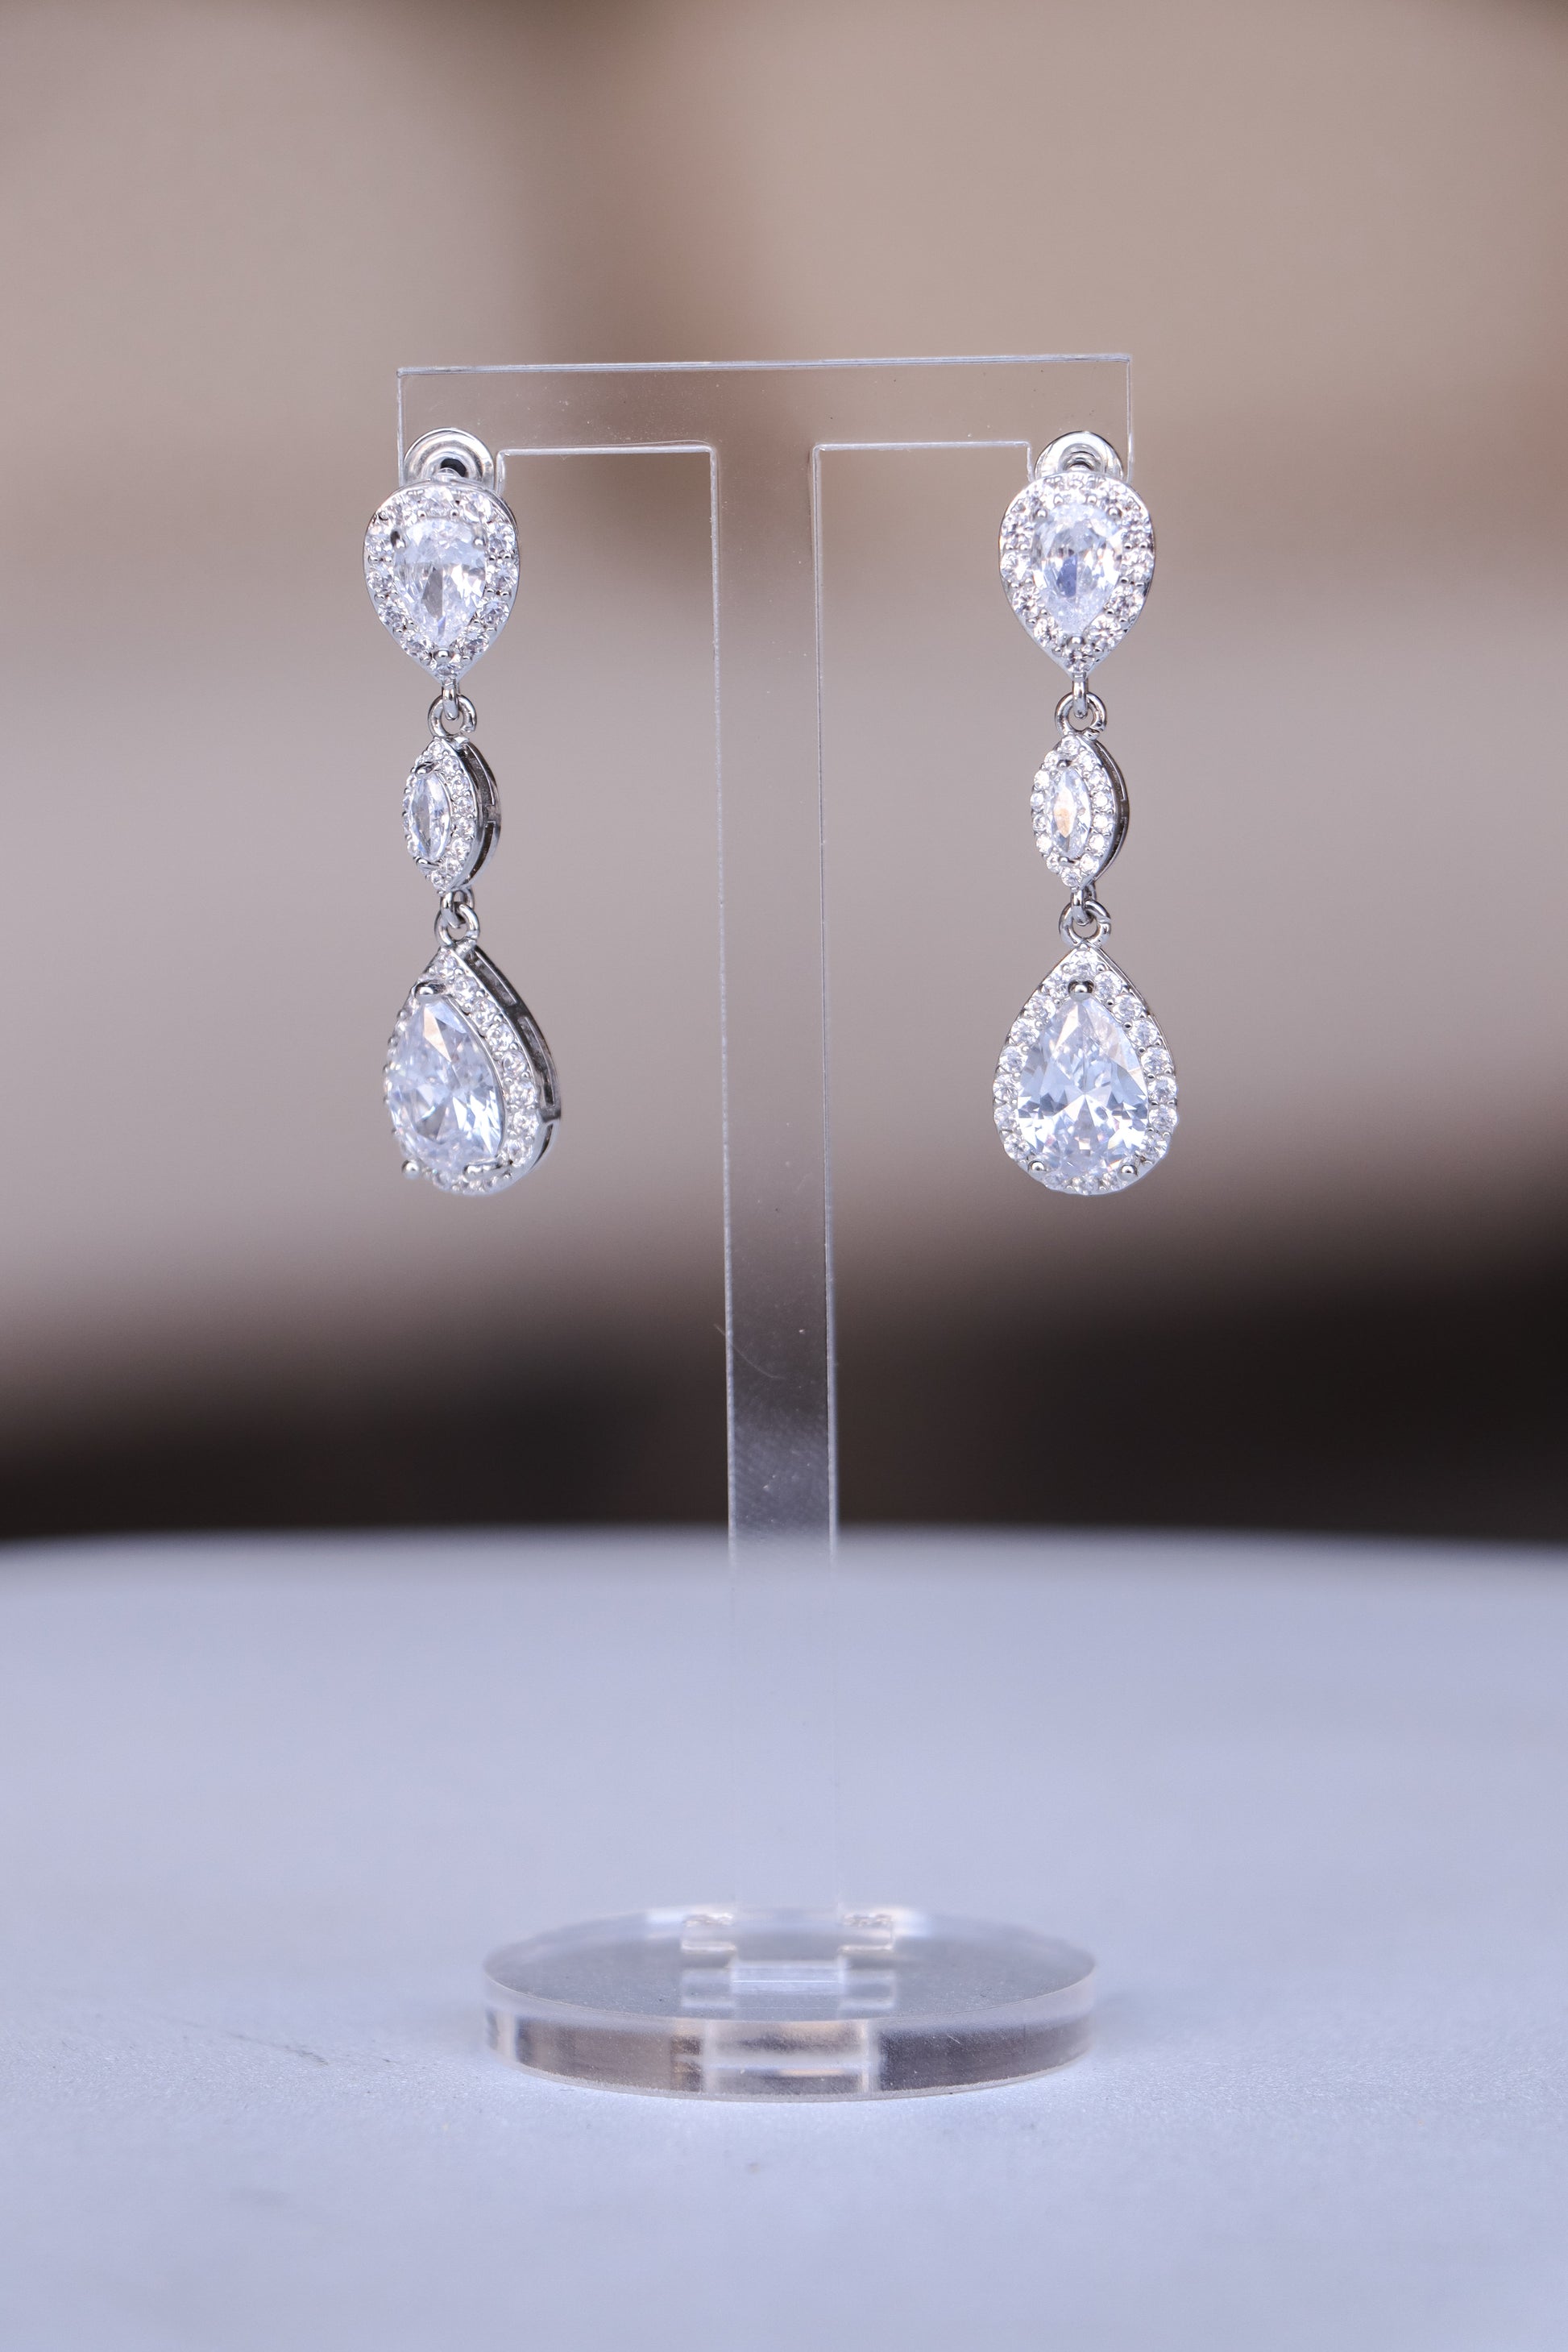 Elegant Iris silver drop earrings with sparkling crystal details